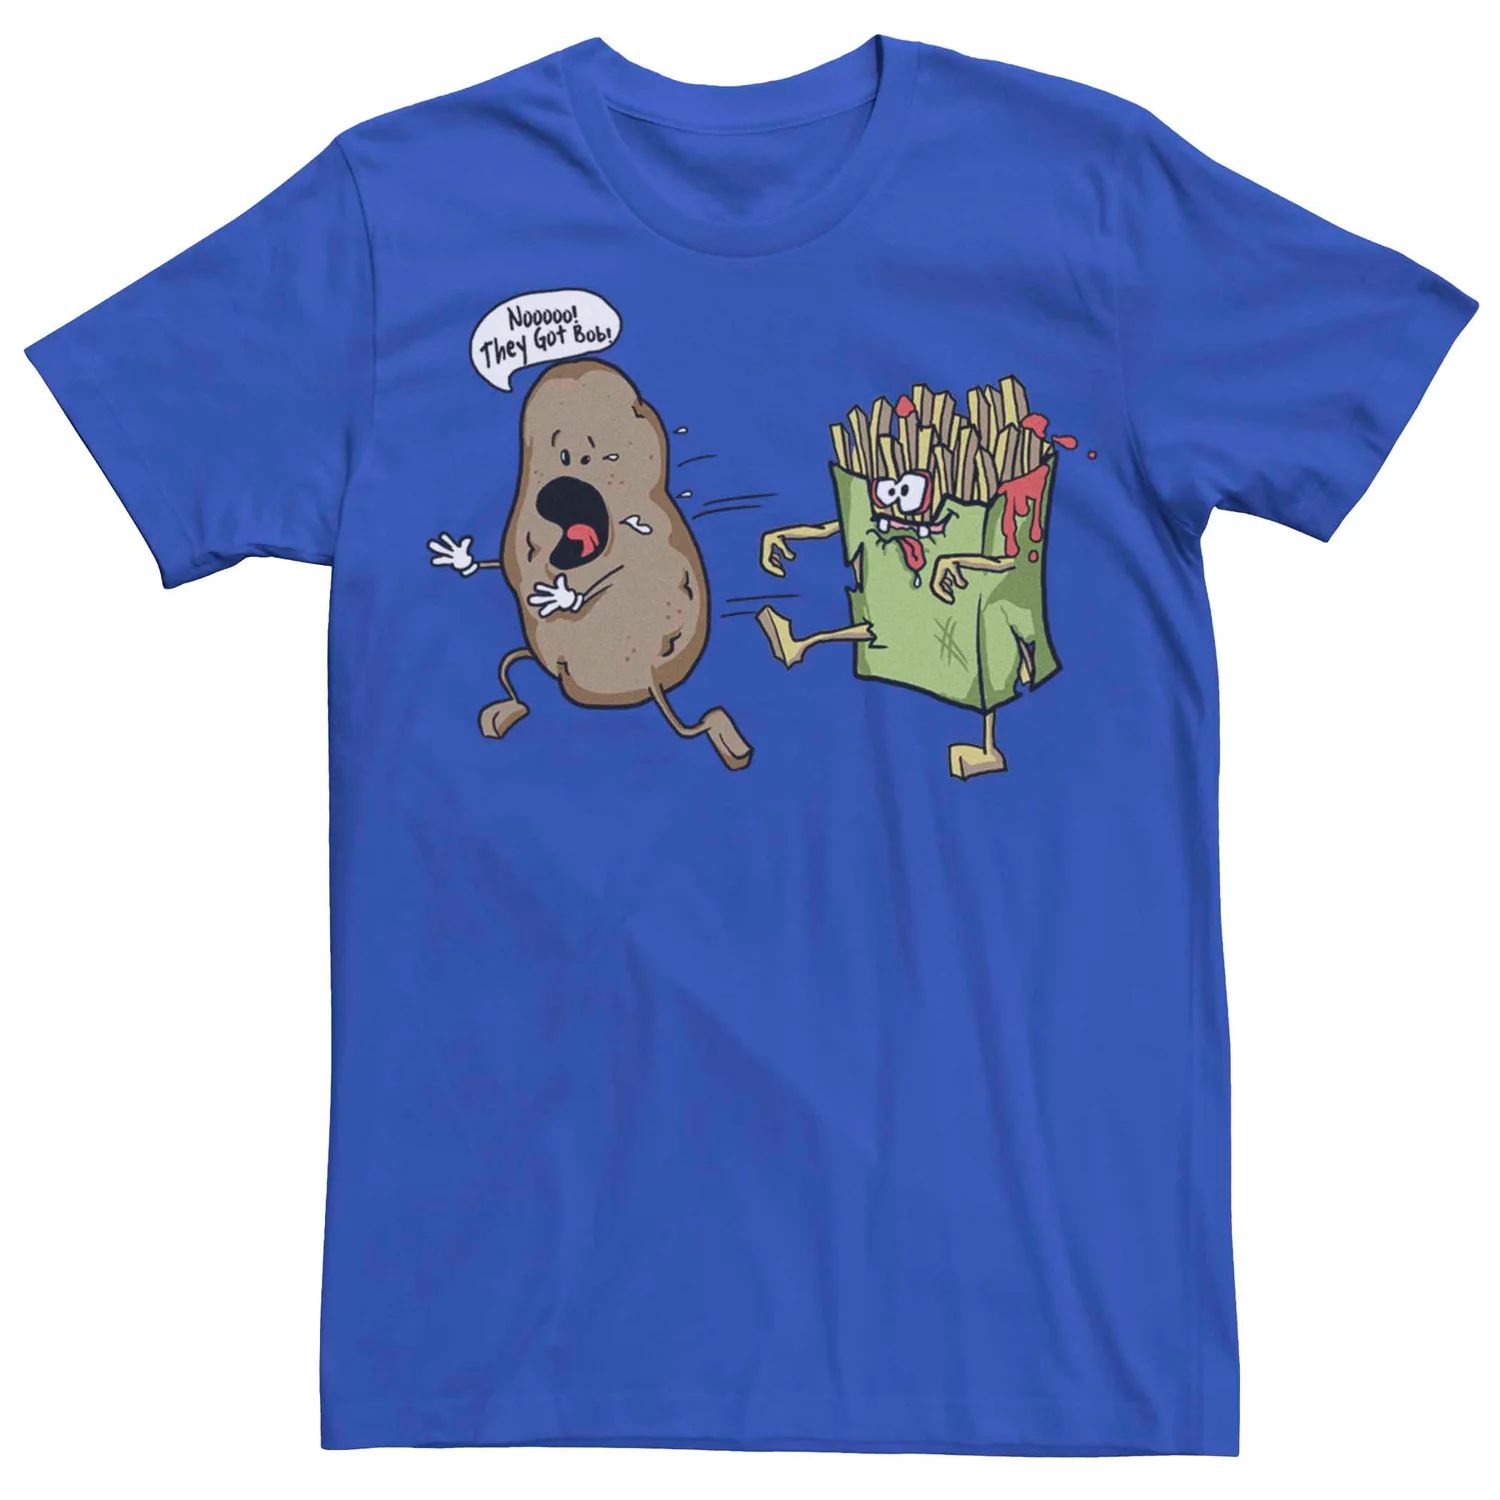 Мужская футболка с юмором и картошкой фри Licensed Character